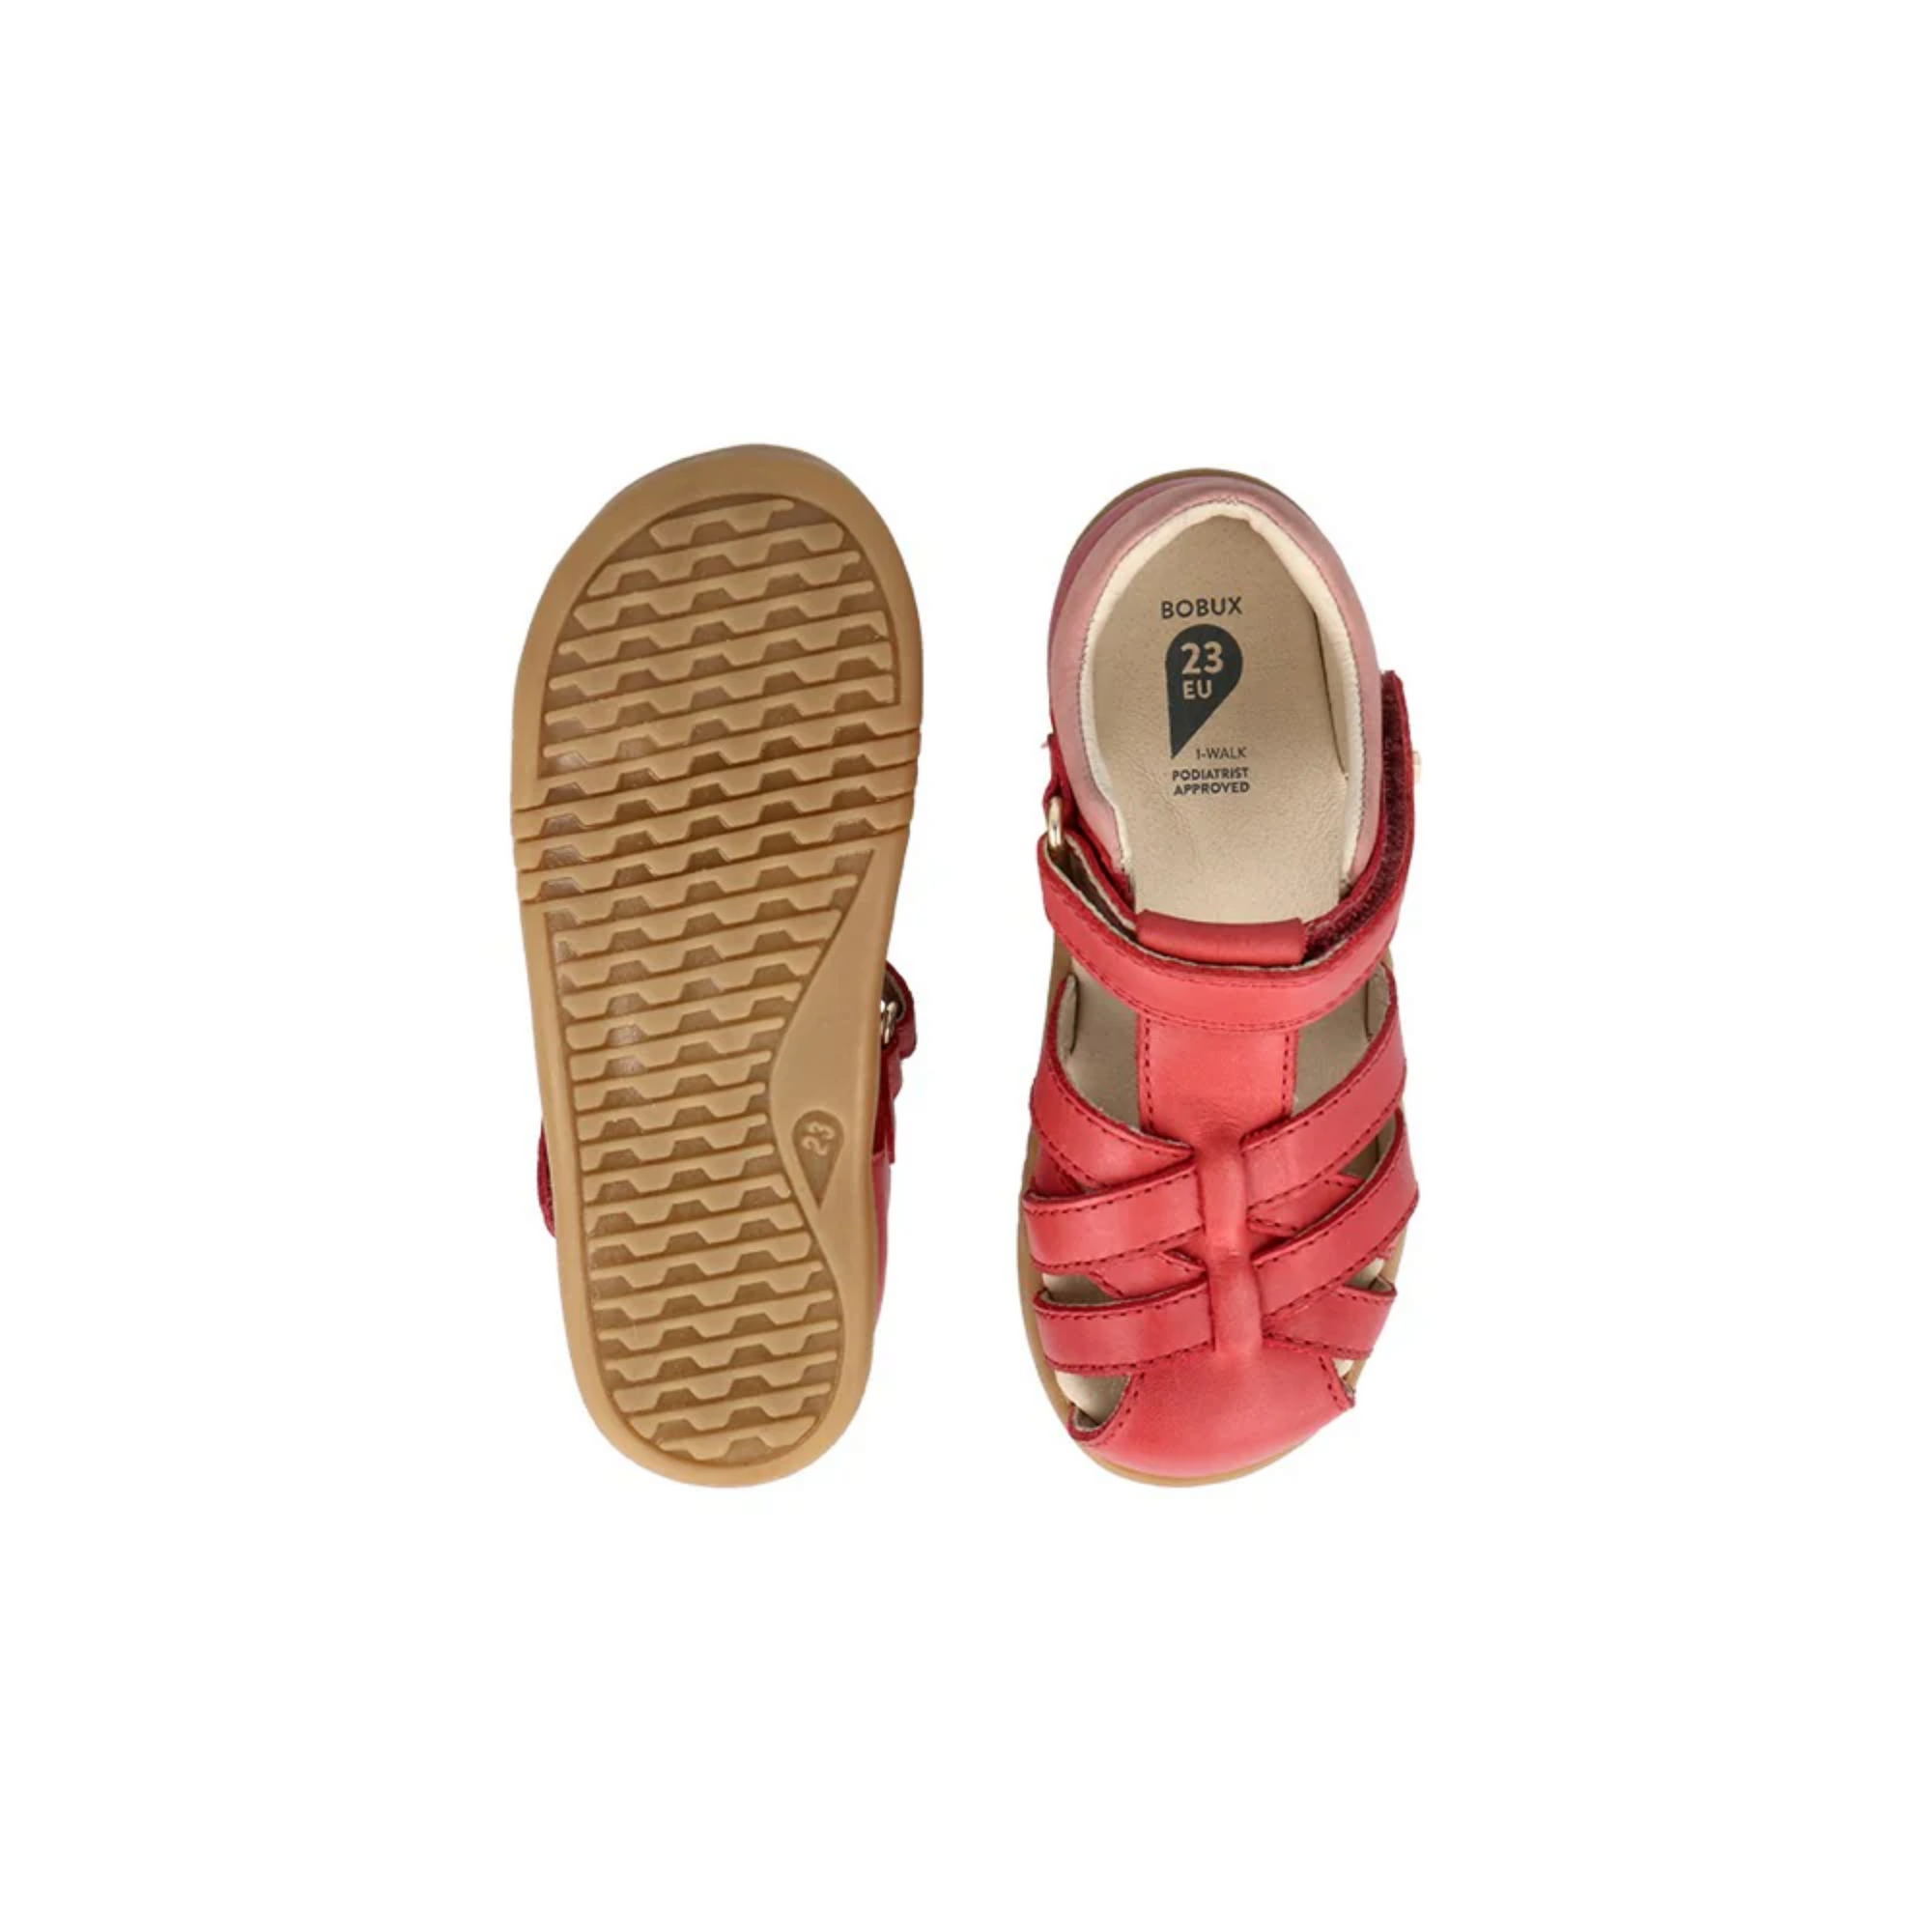 Bobux Mineral Red & Rose Cross Jump Sandals i-Walk